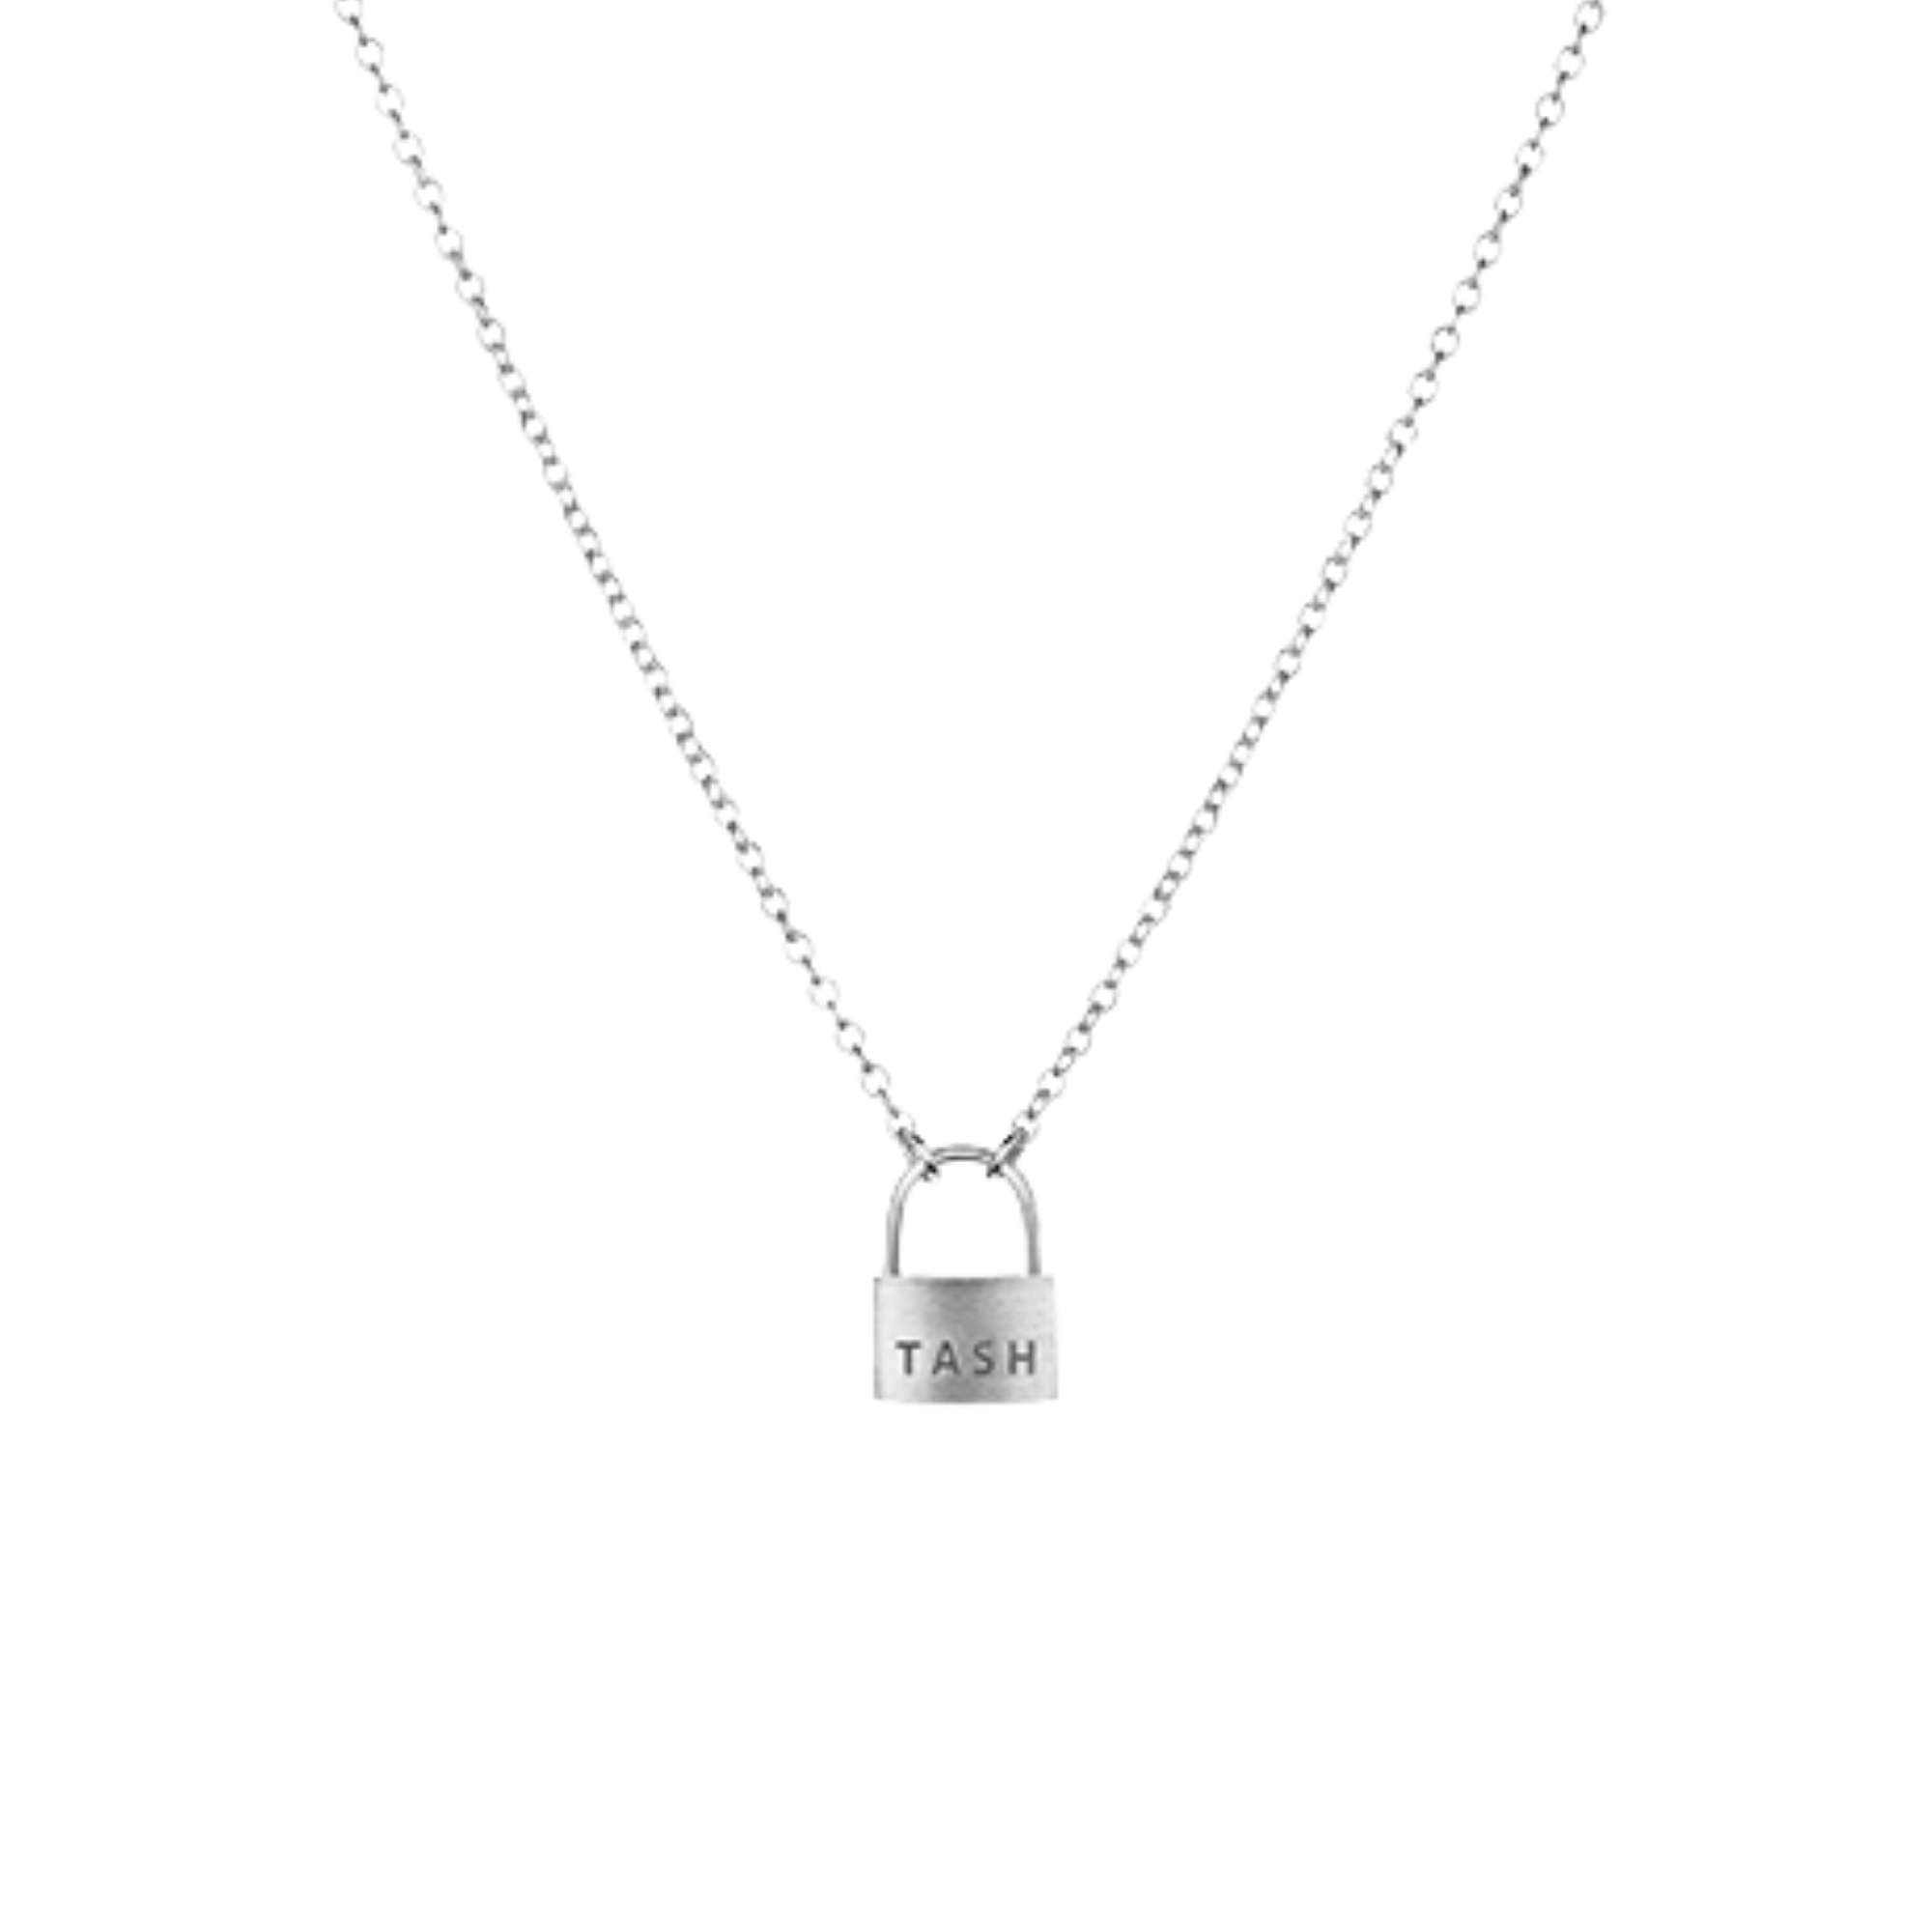 Maria Tash padlock necklace, $920 at Maria Tash